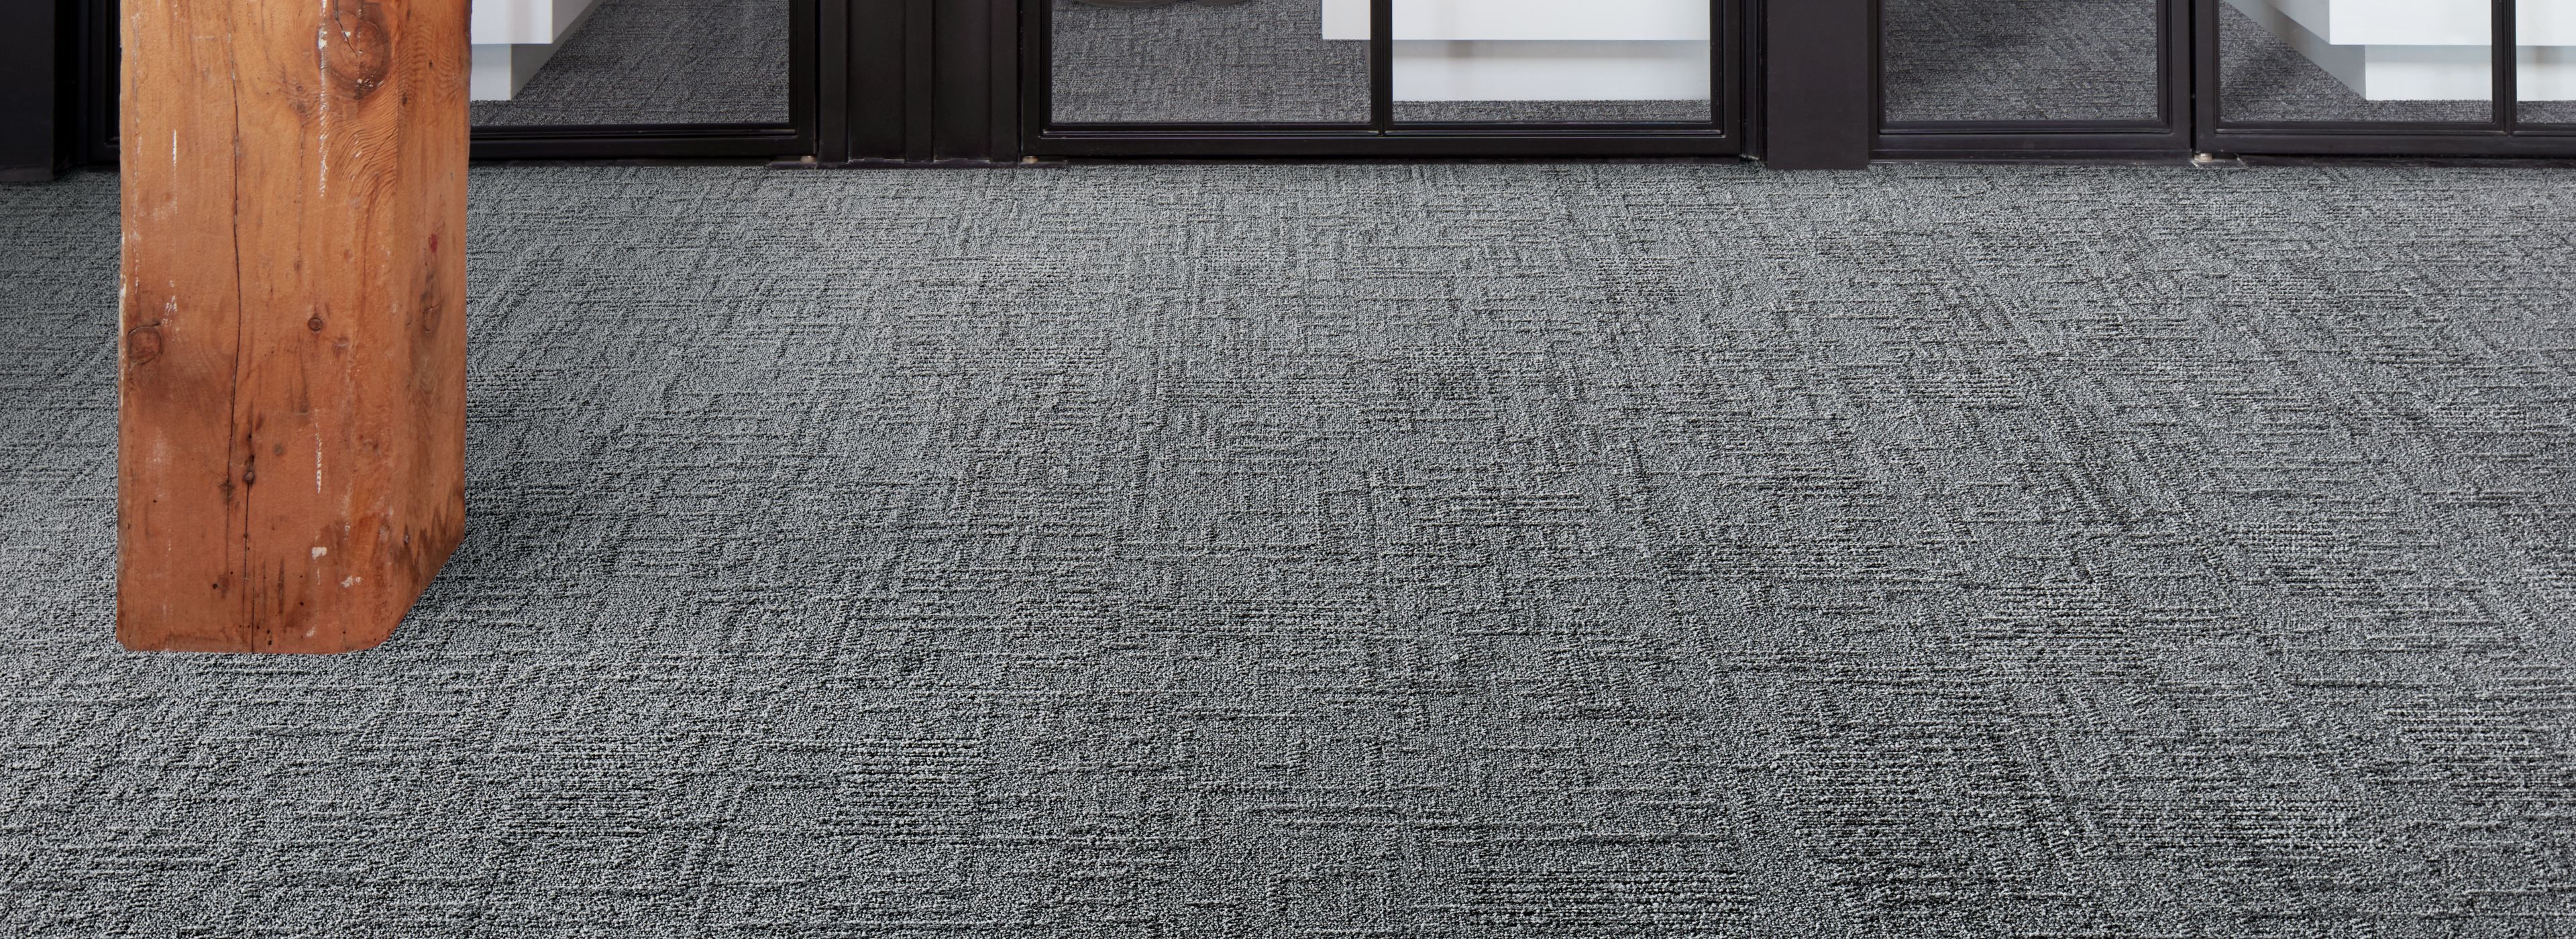 image Interface Vintage Kimono carpet tile in office area with focus rooms numéro 1